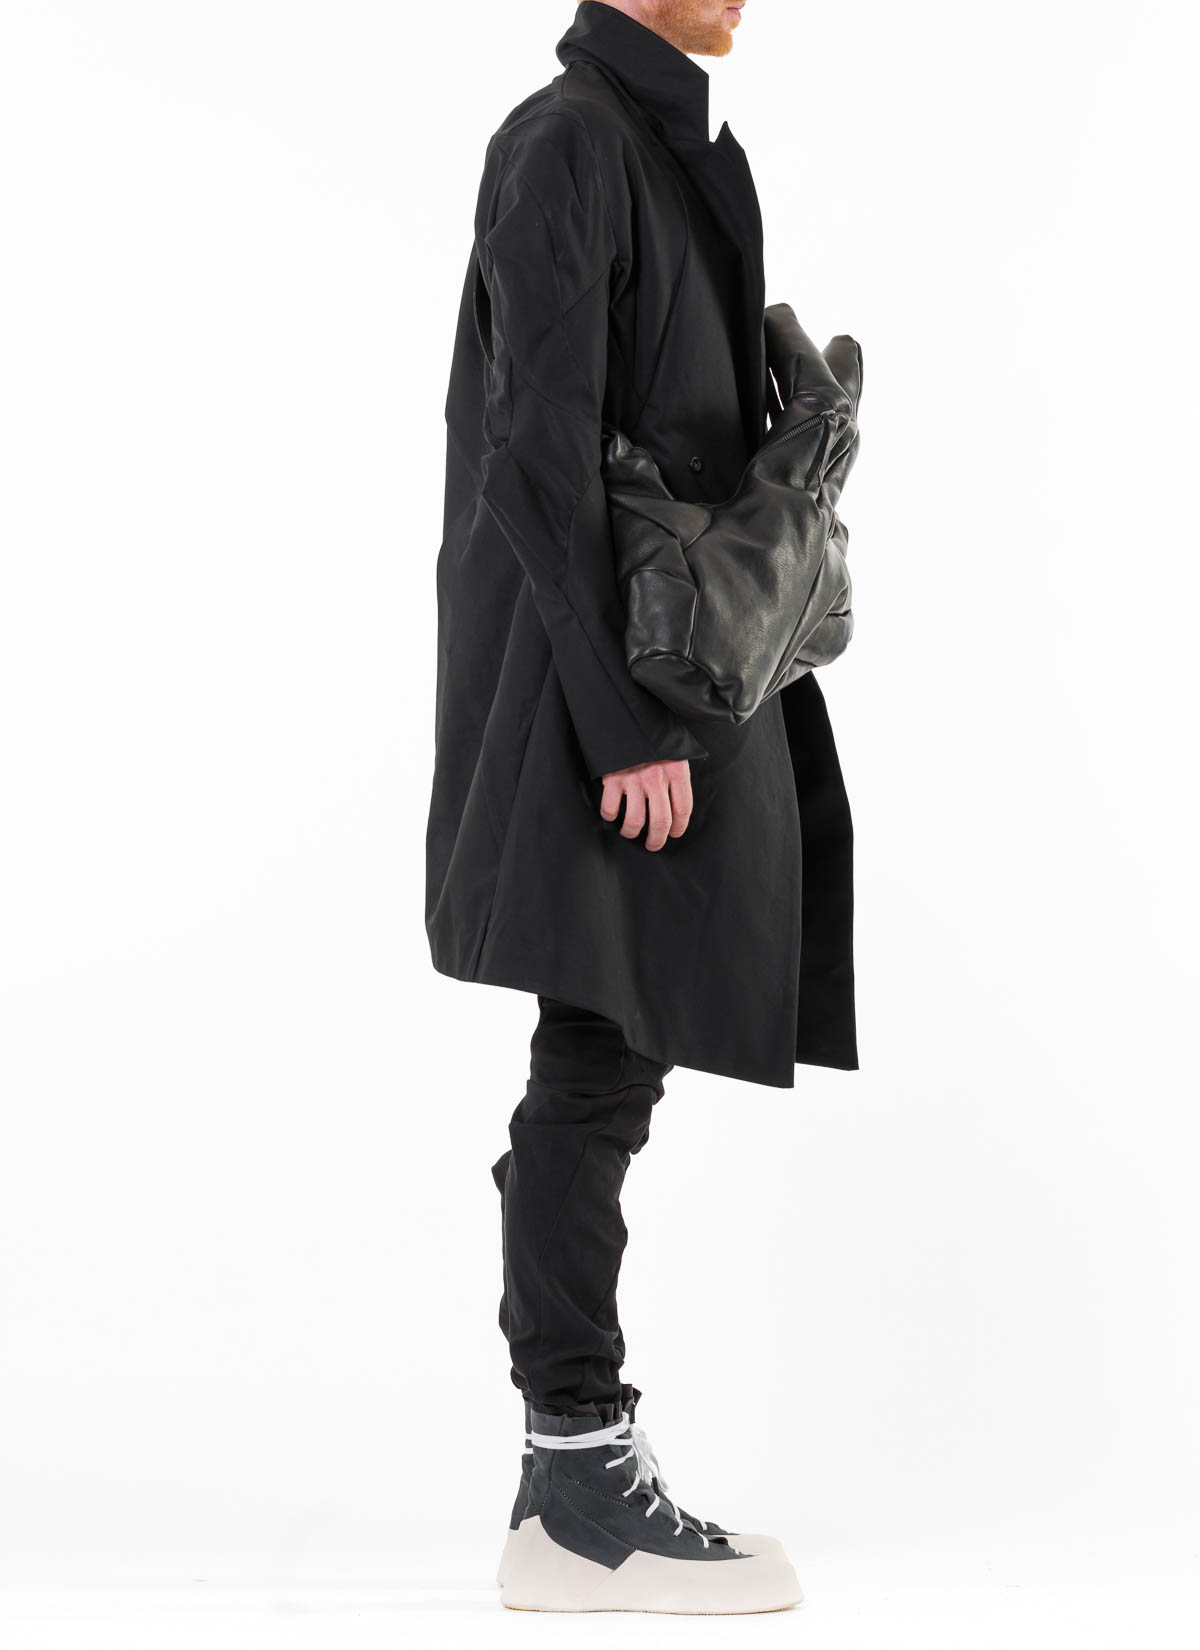 hide-m | LEON EMANUEL BLANCK Distortion Handbag, black horse